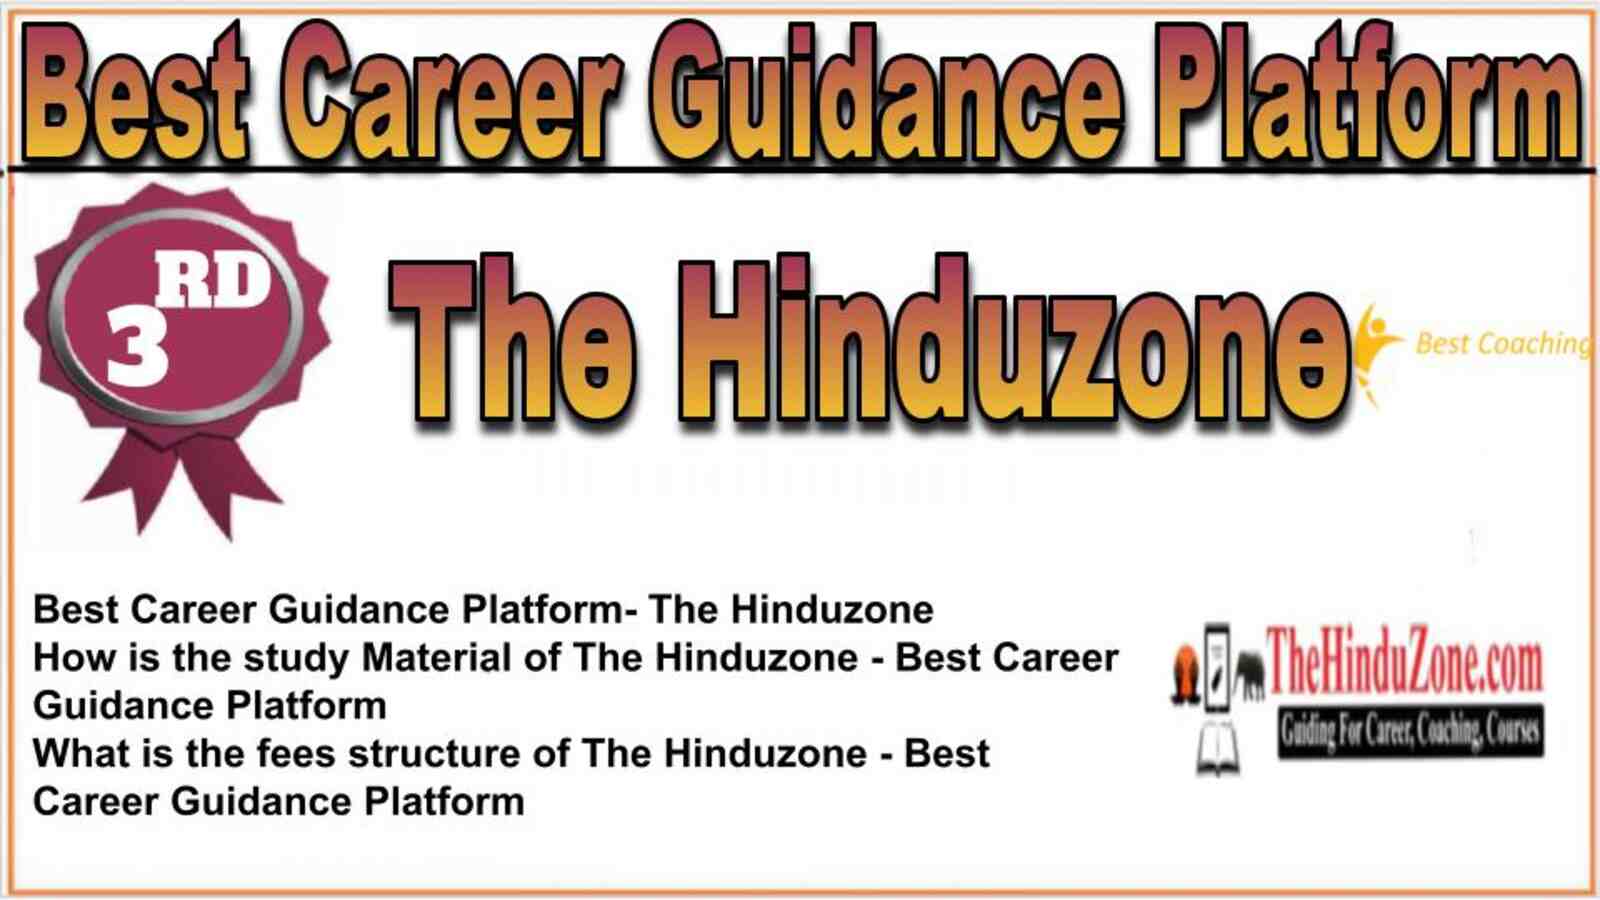 Rank 3 best career guidance platform for Public administration